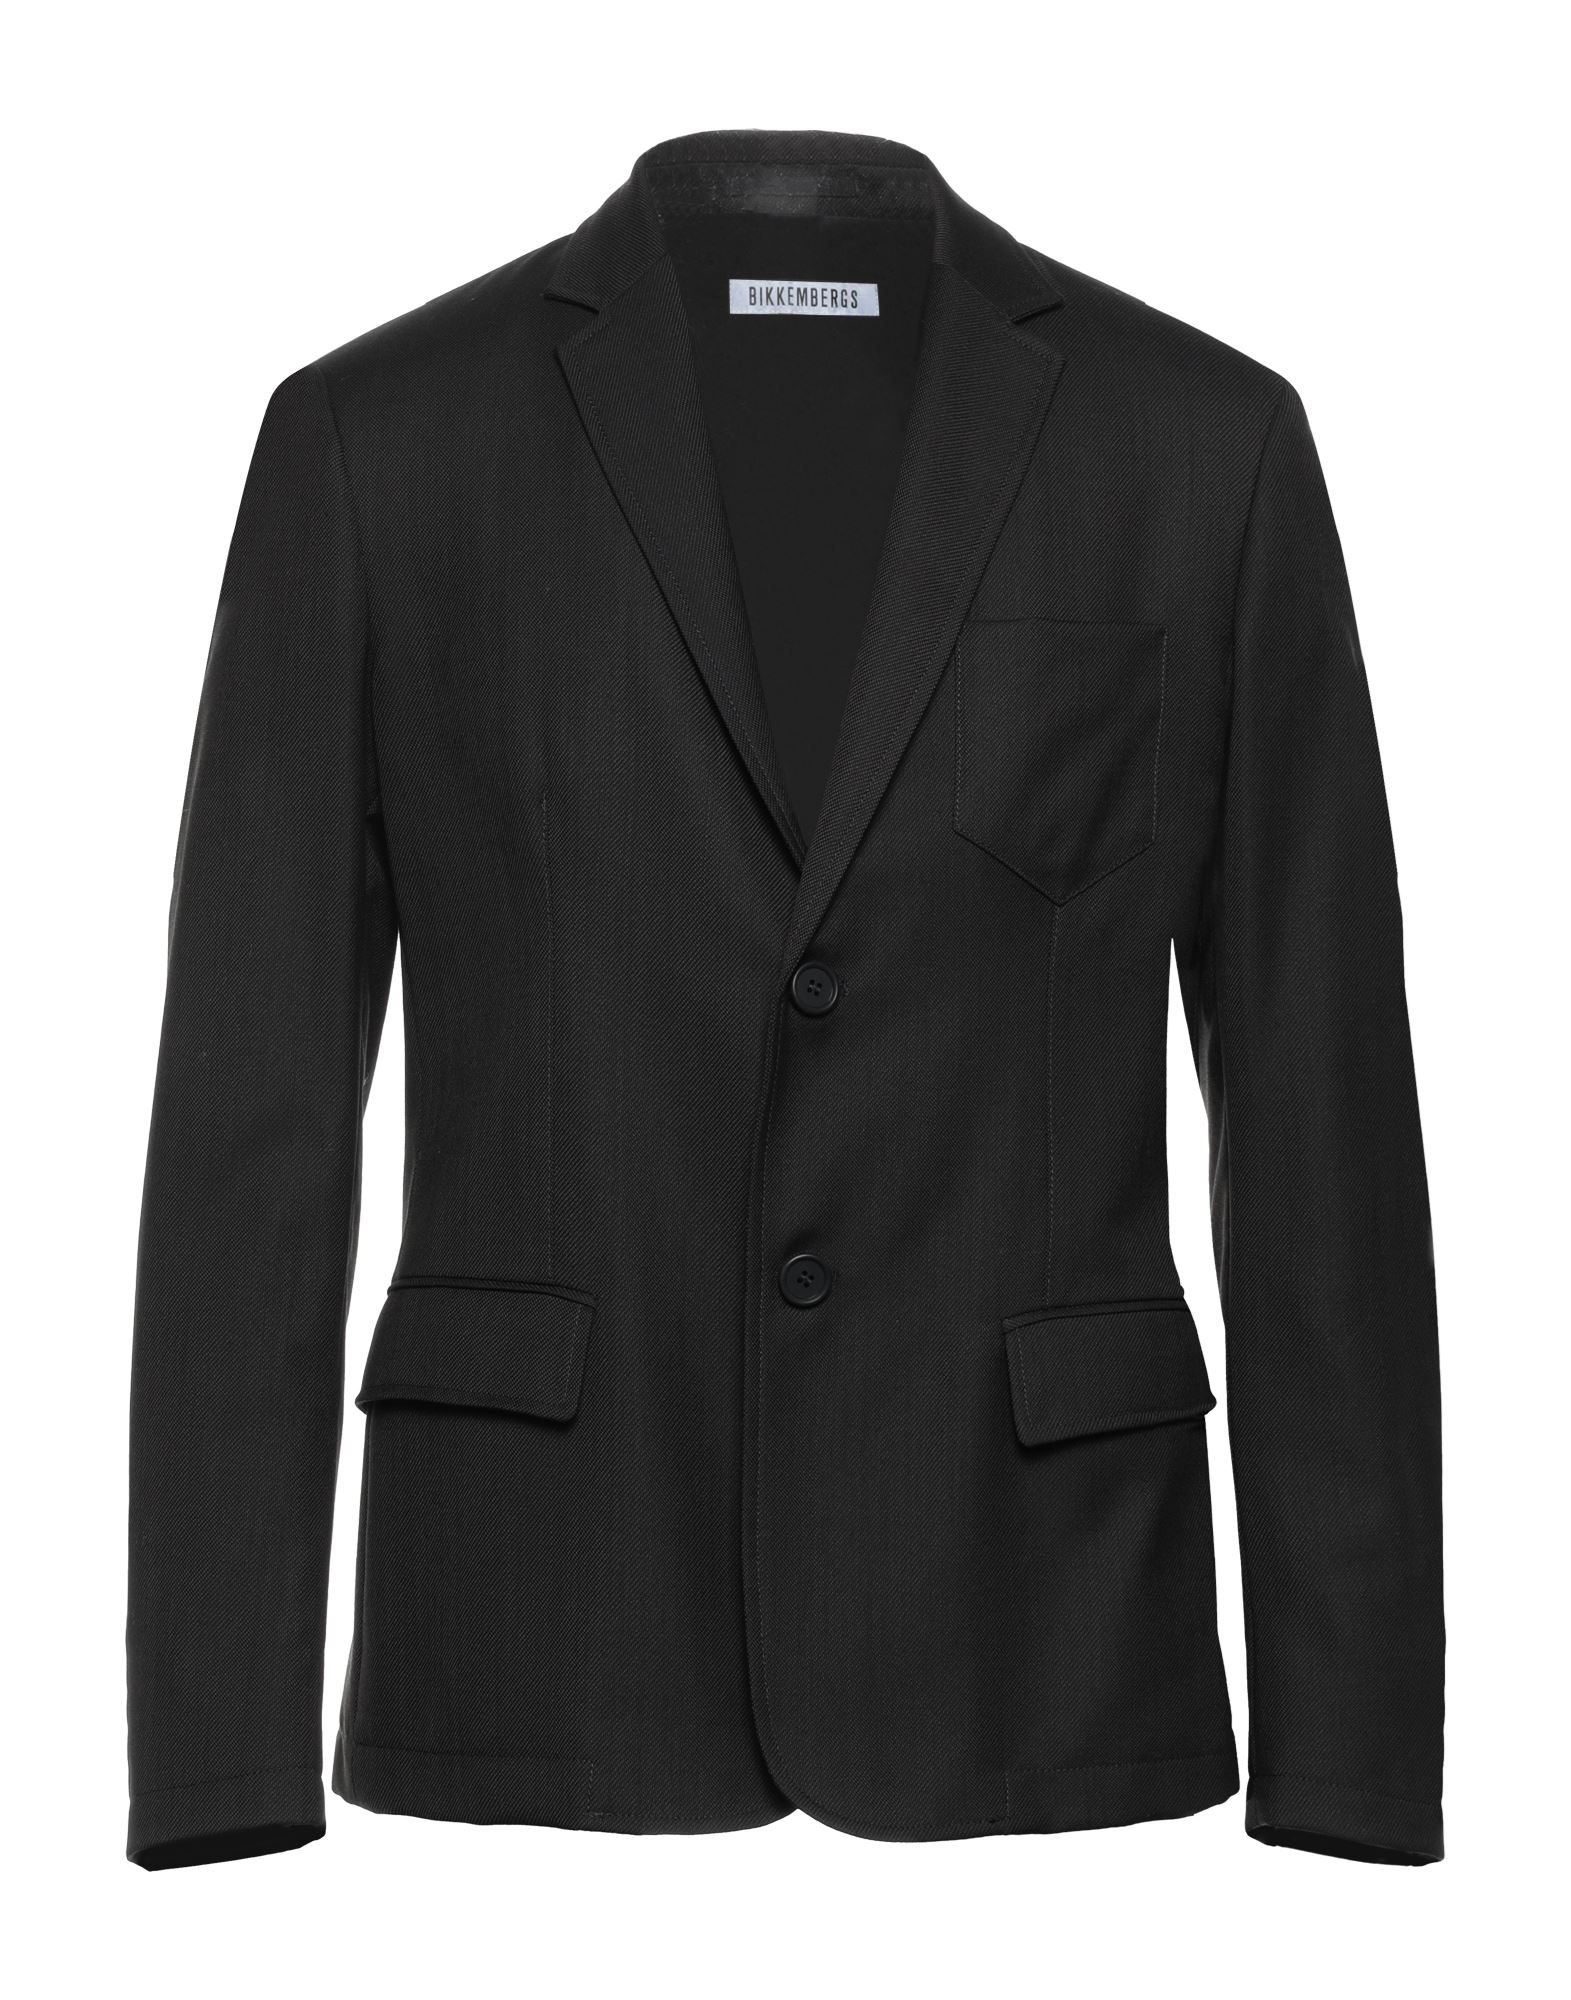 Bikkembergs Suit Jackets In Black